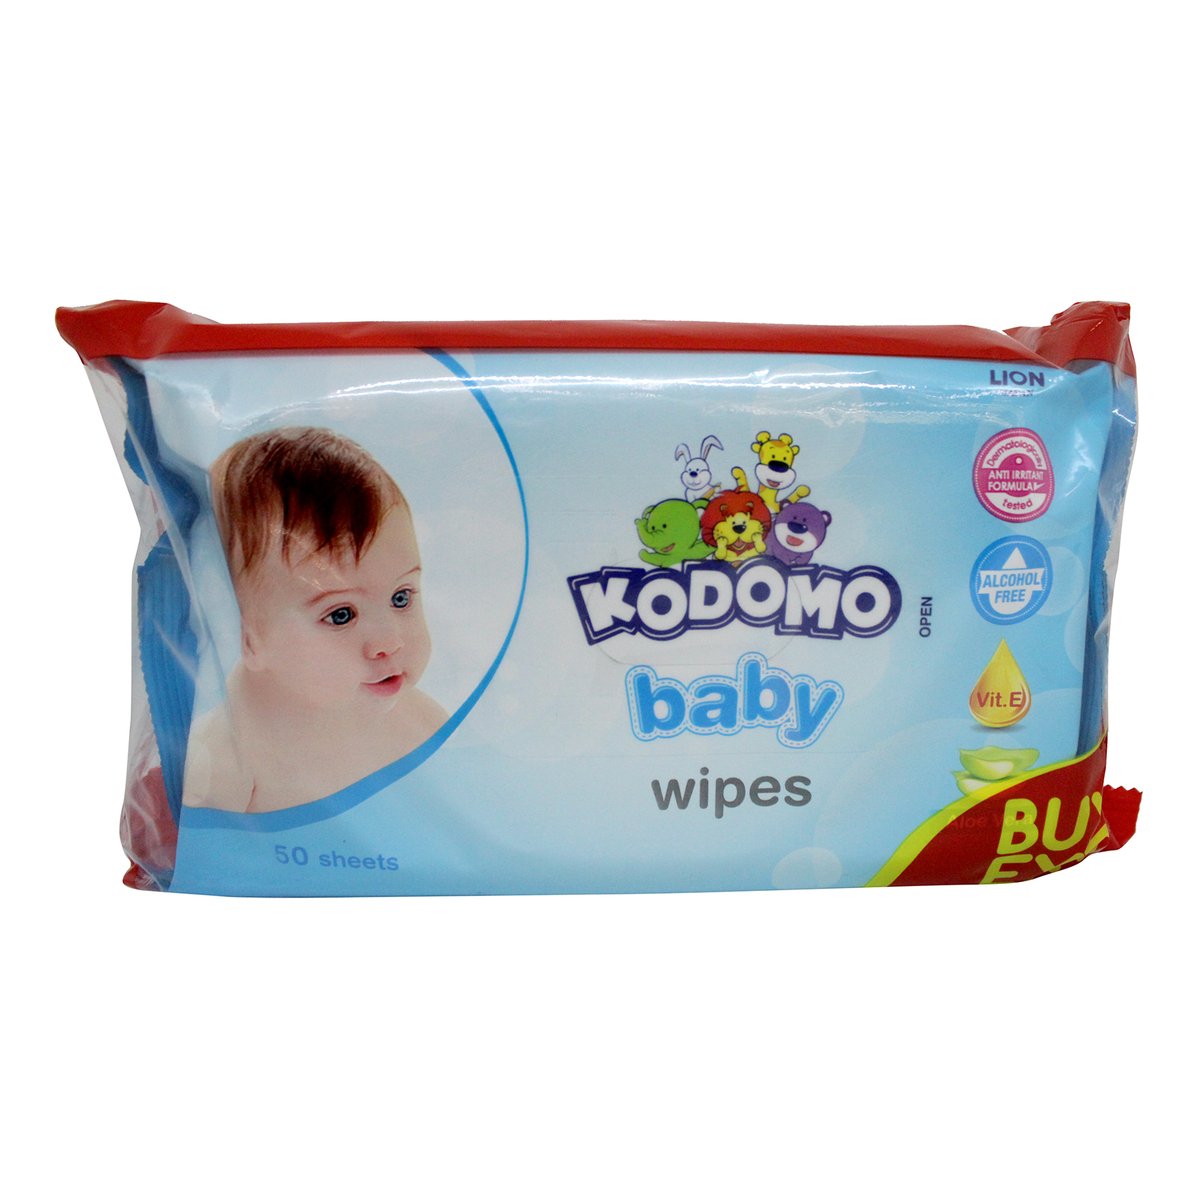 Kodomo Baby Wipes Blue 50s